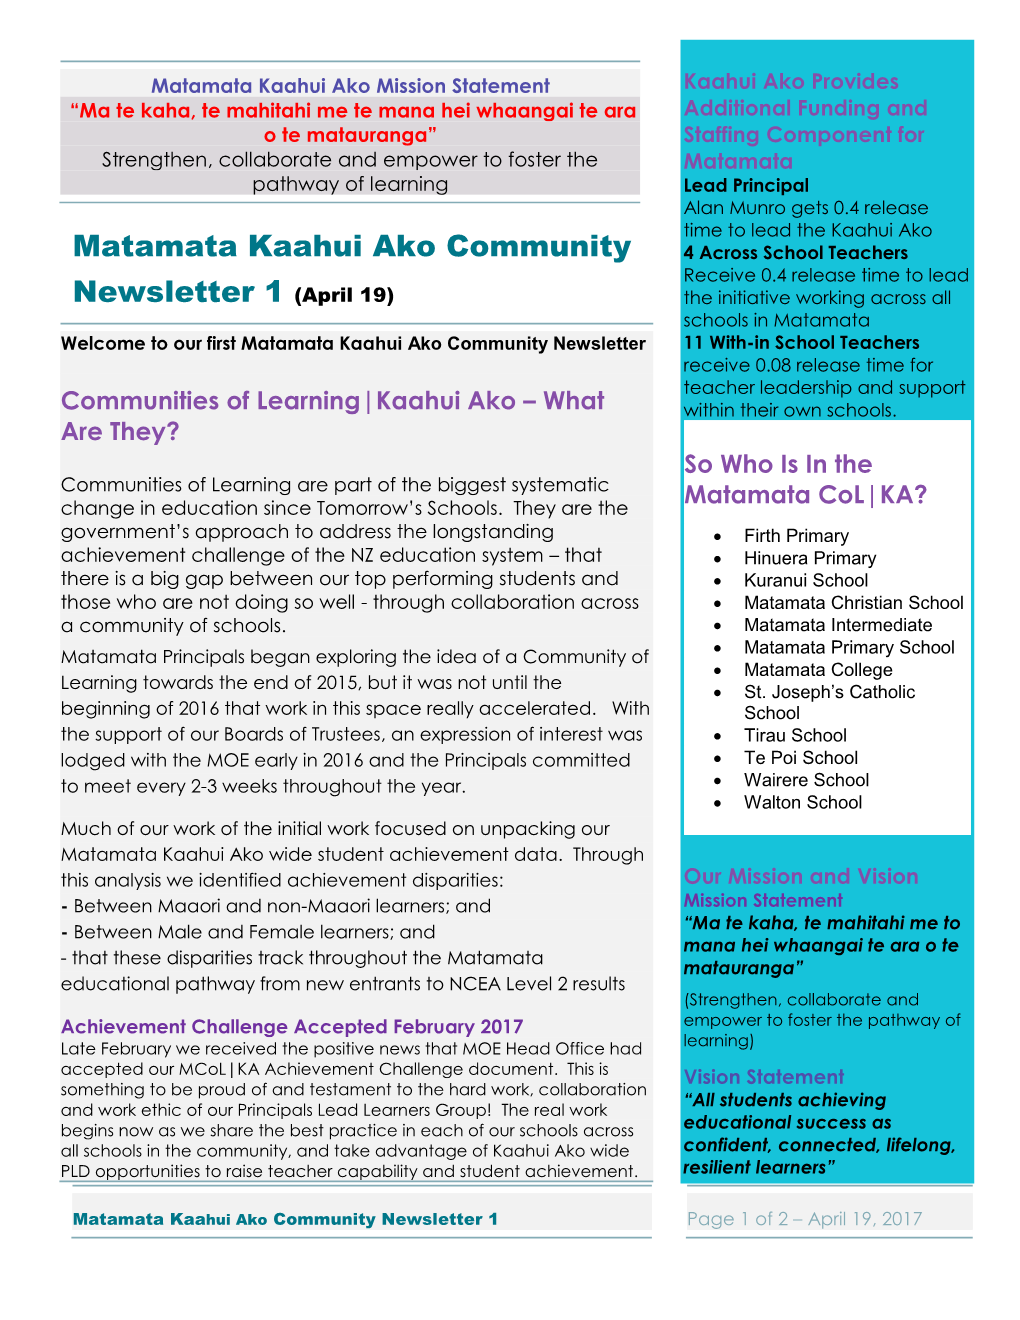 Matamata Kaahui Ako Community Newsletter 1 (April